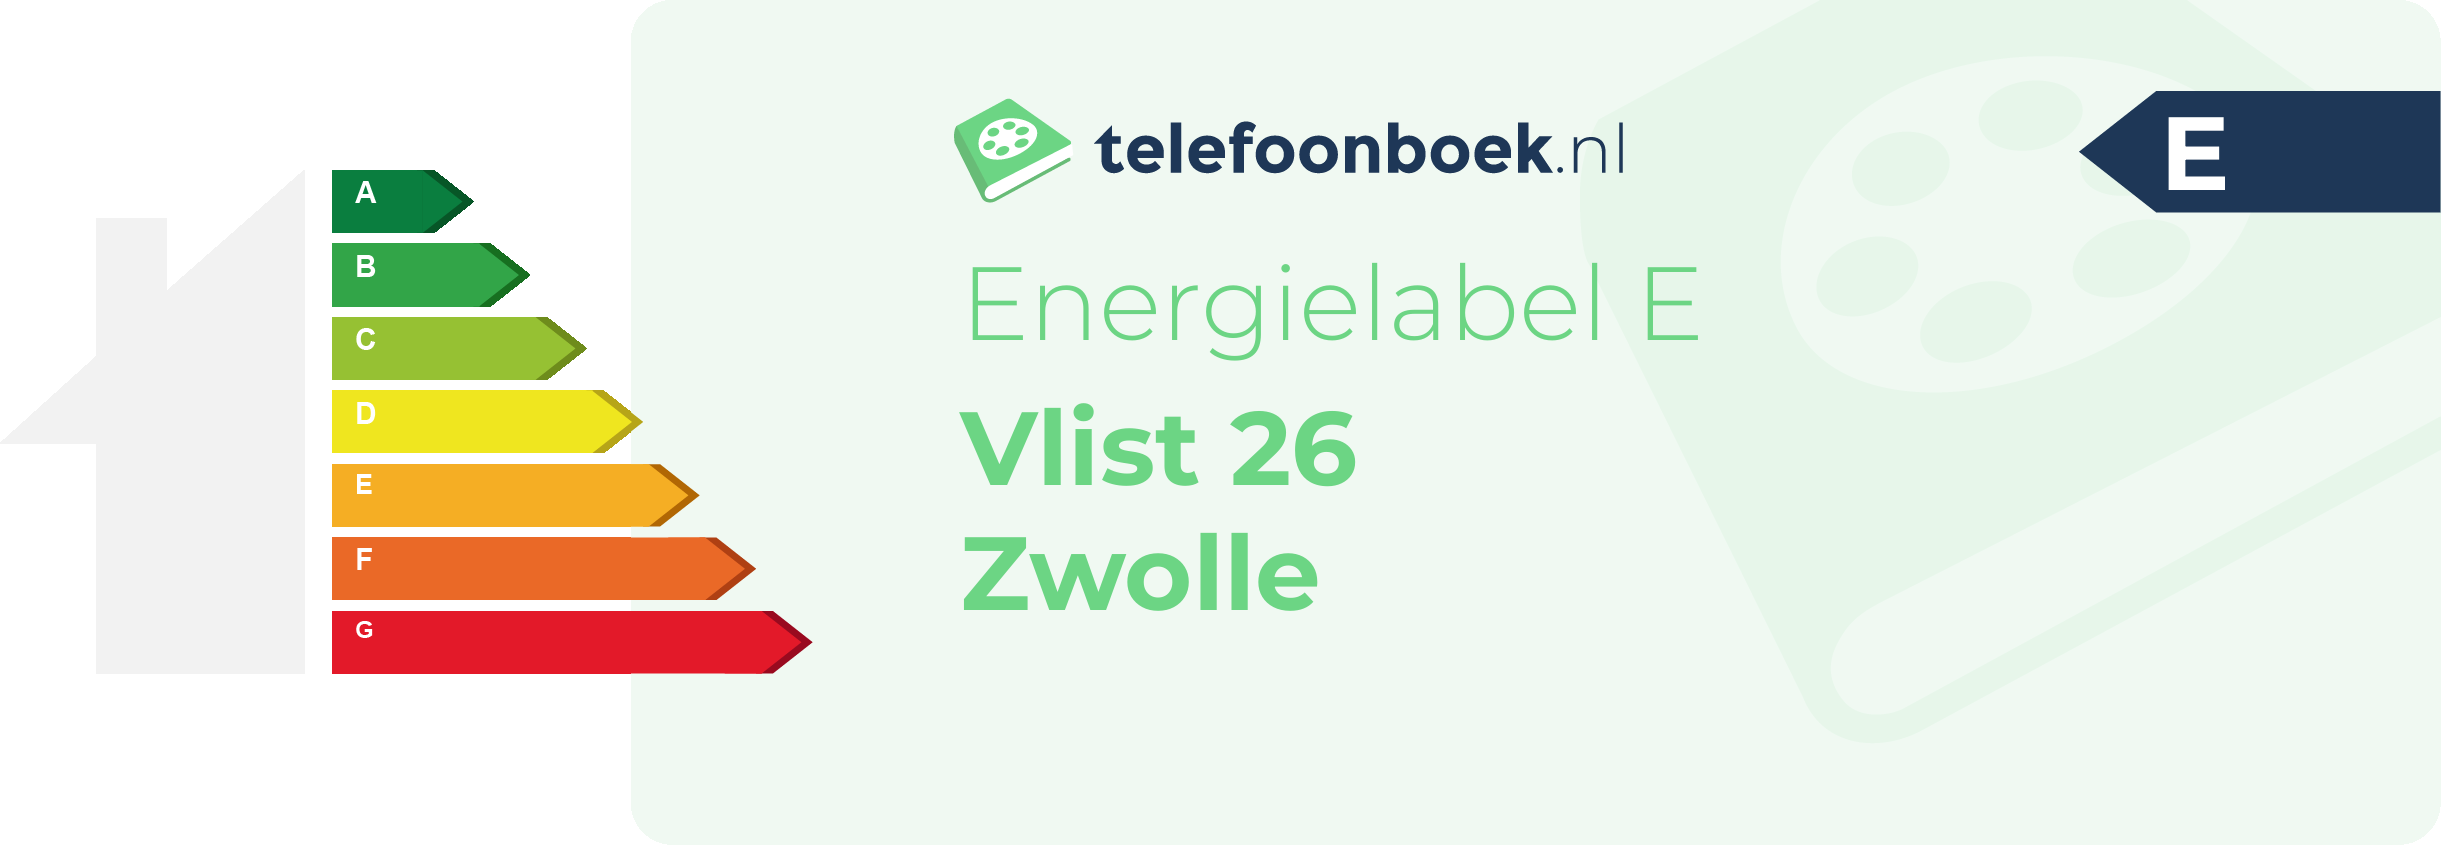 Energielabel Vlist 26 Zwolle